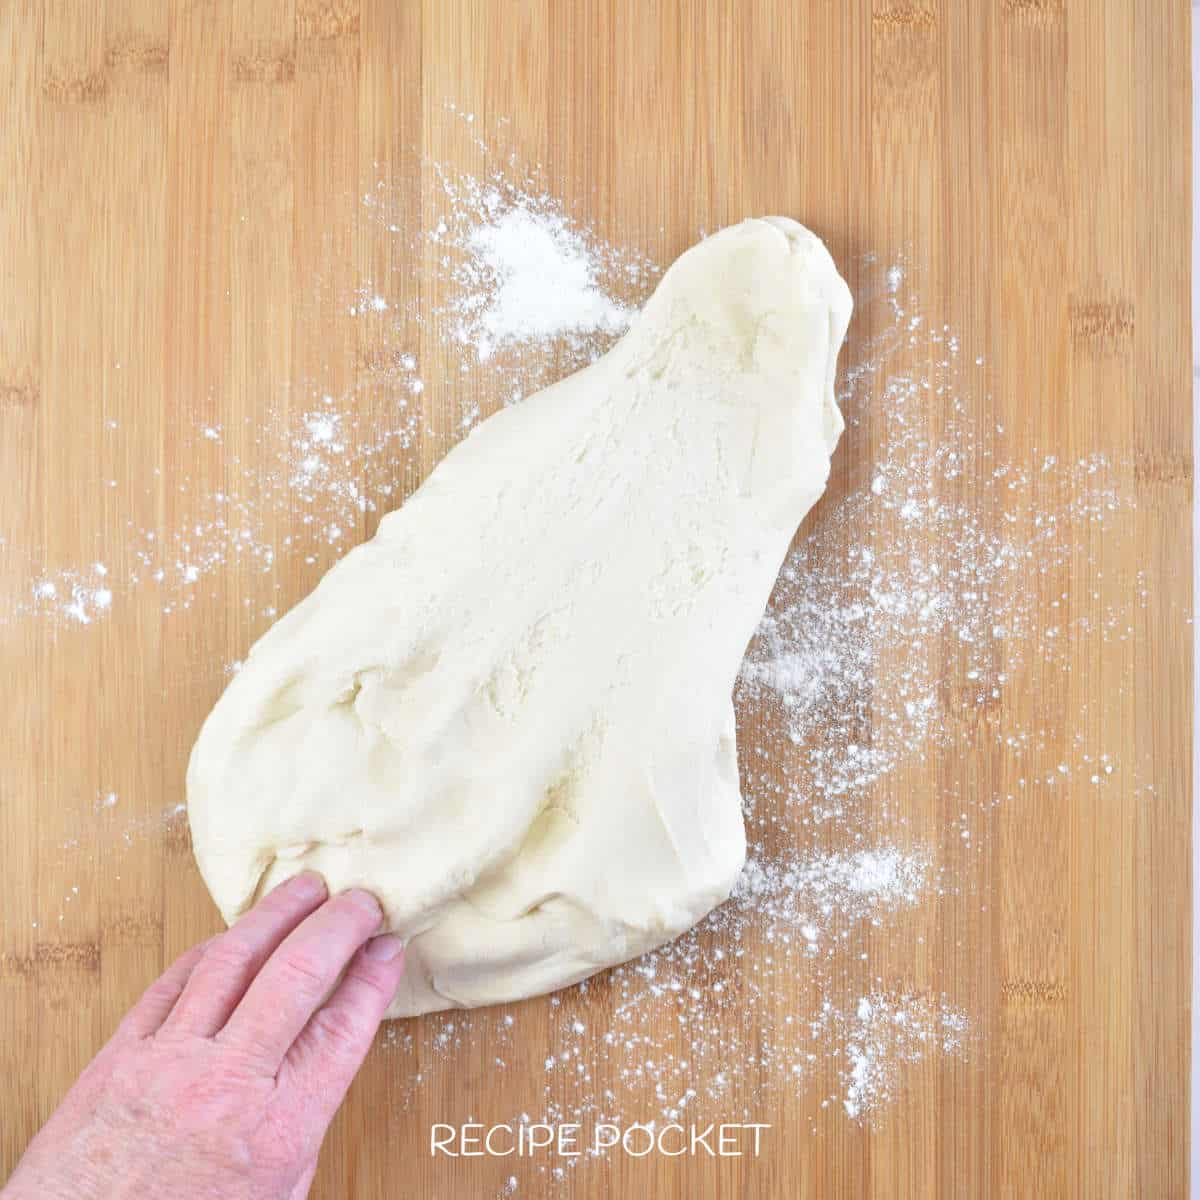 Dough on a board